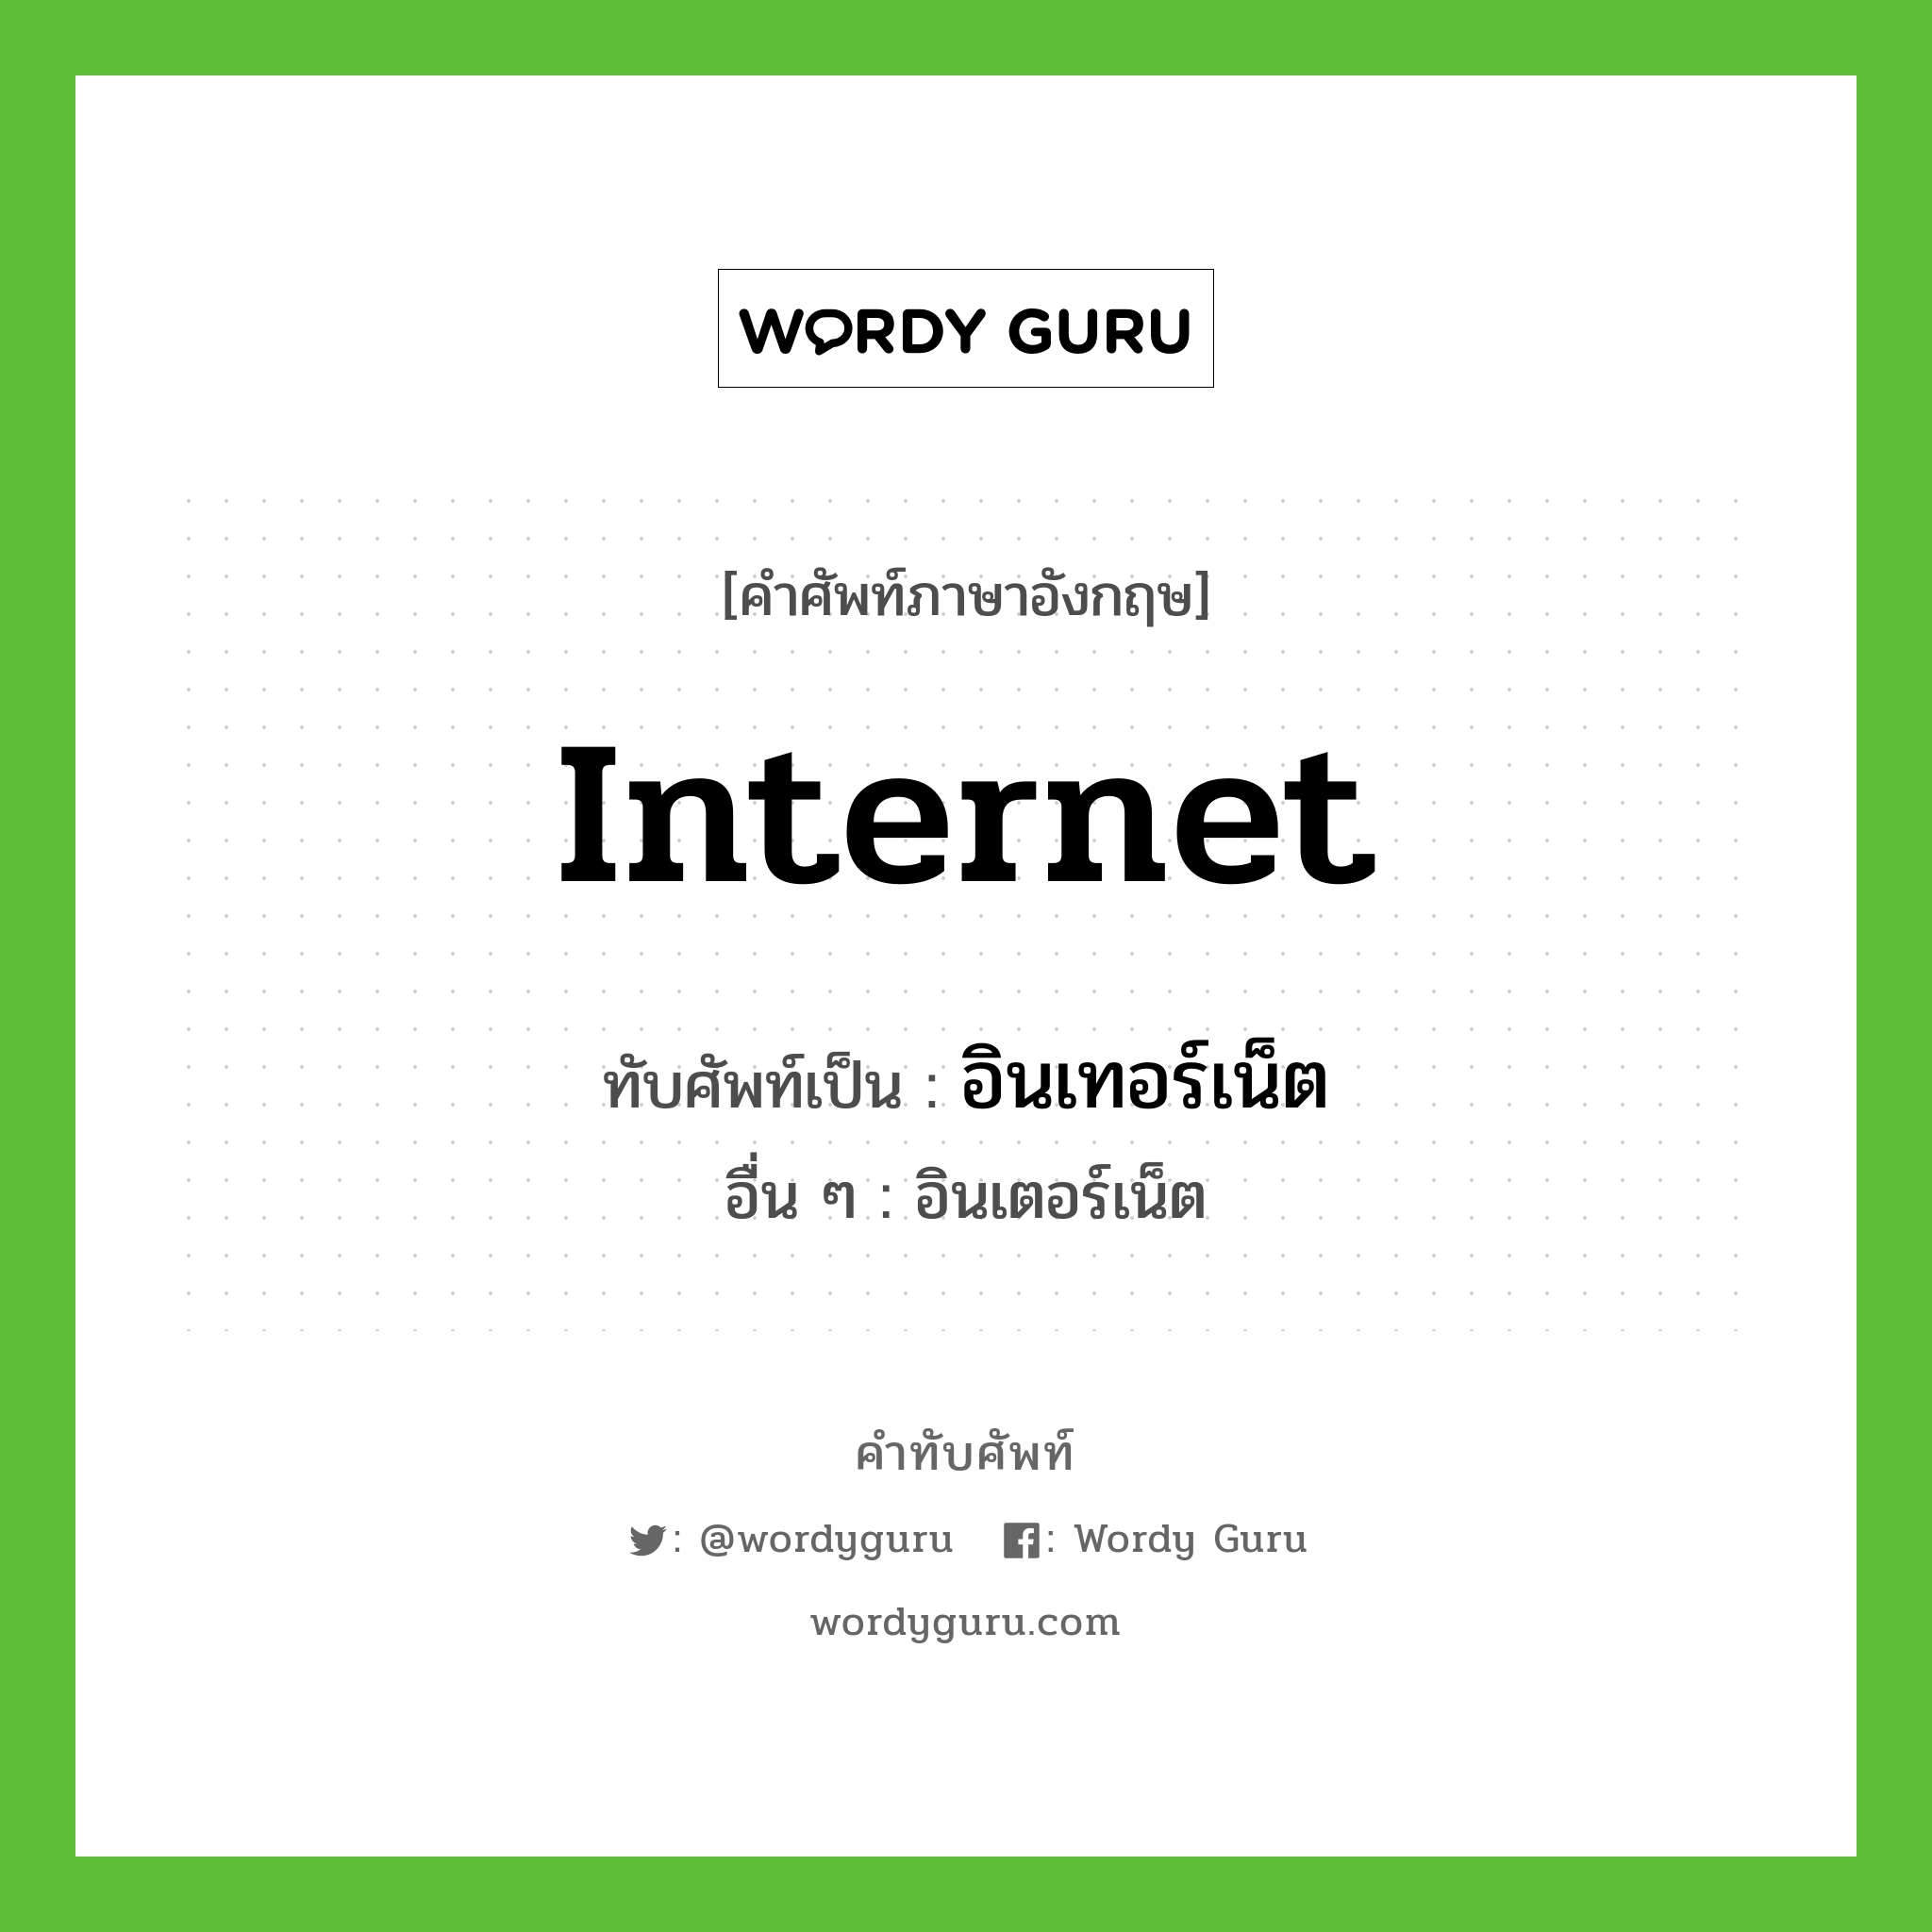 internet เขียนเป็นคำไทยว่าอะไร?, คำศัพท์ภาษาอังกฤษ internet ทับศัพท์เป็น อินเทอร์เน็ต อื่น ๆ อินเตอร์เน็ต